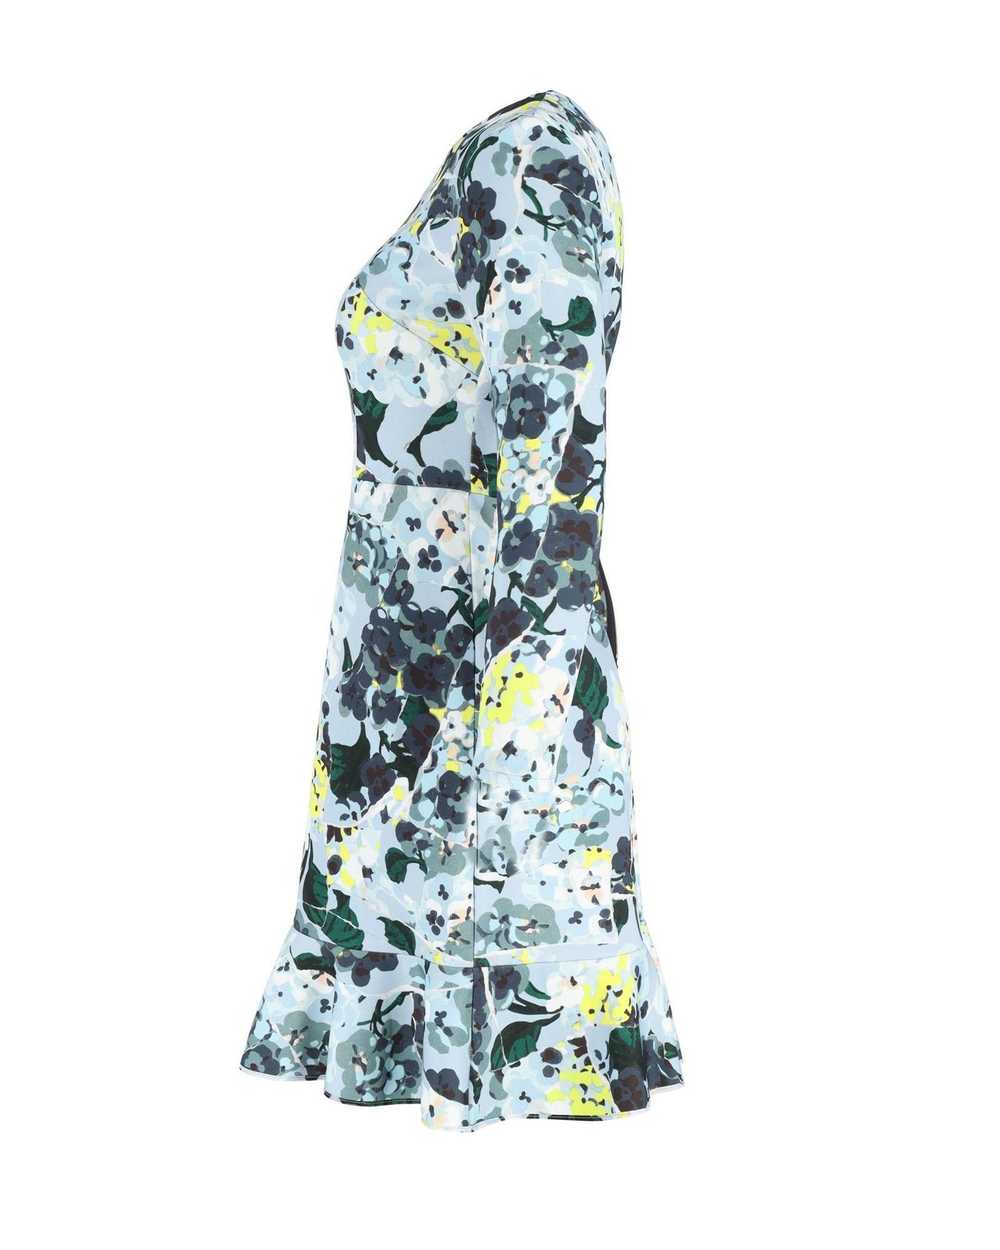 Erdem Floral-Print Mini Dress with Long Sleeves - image 2